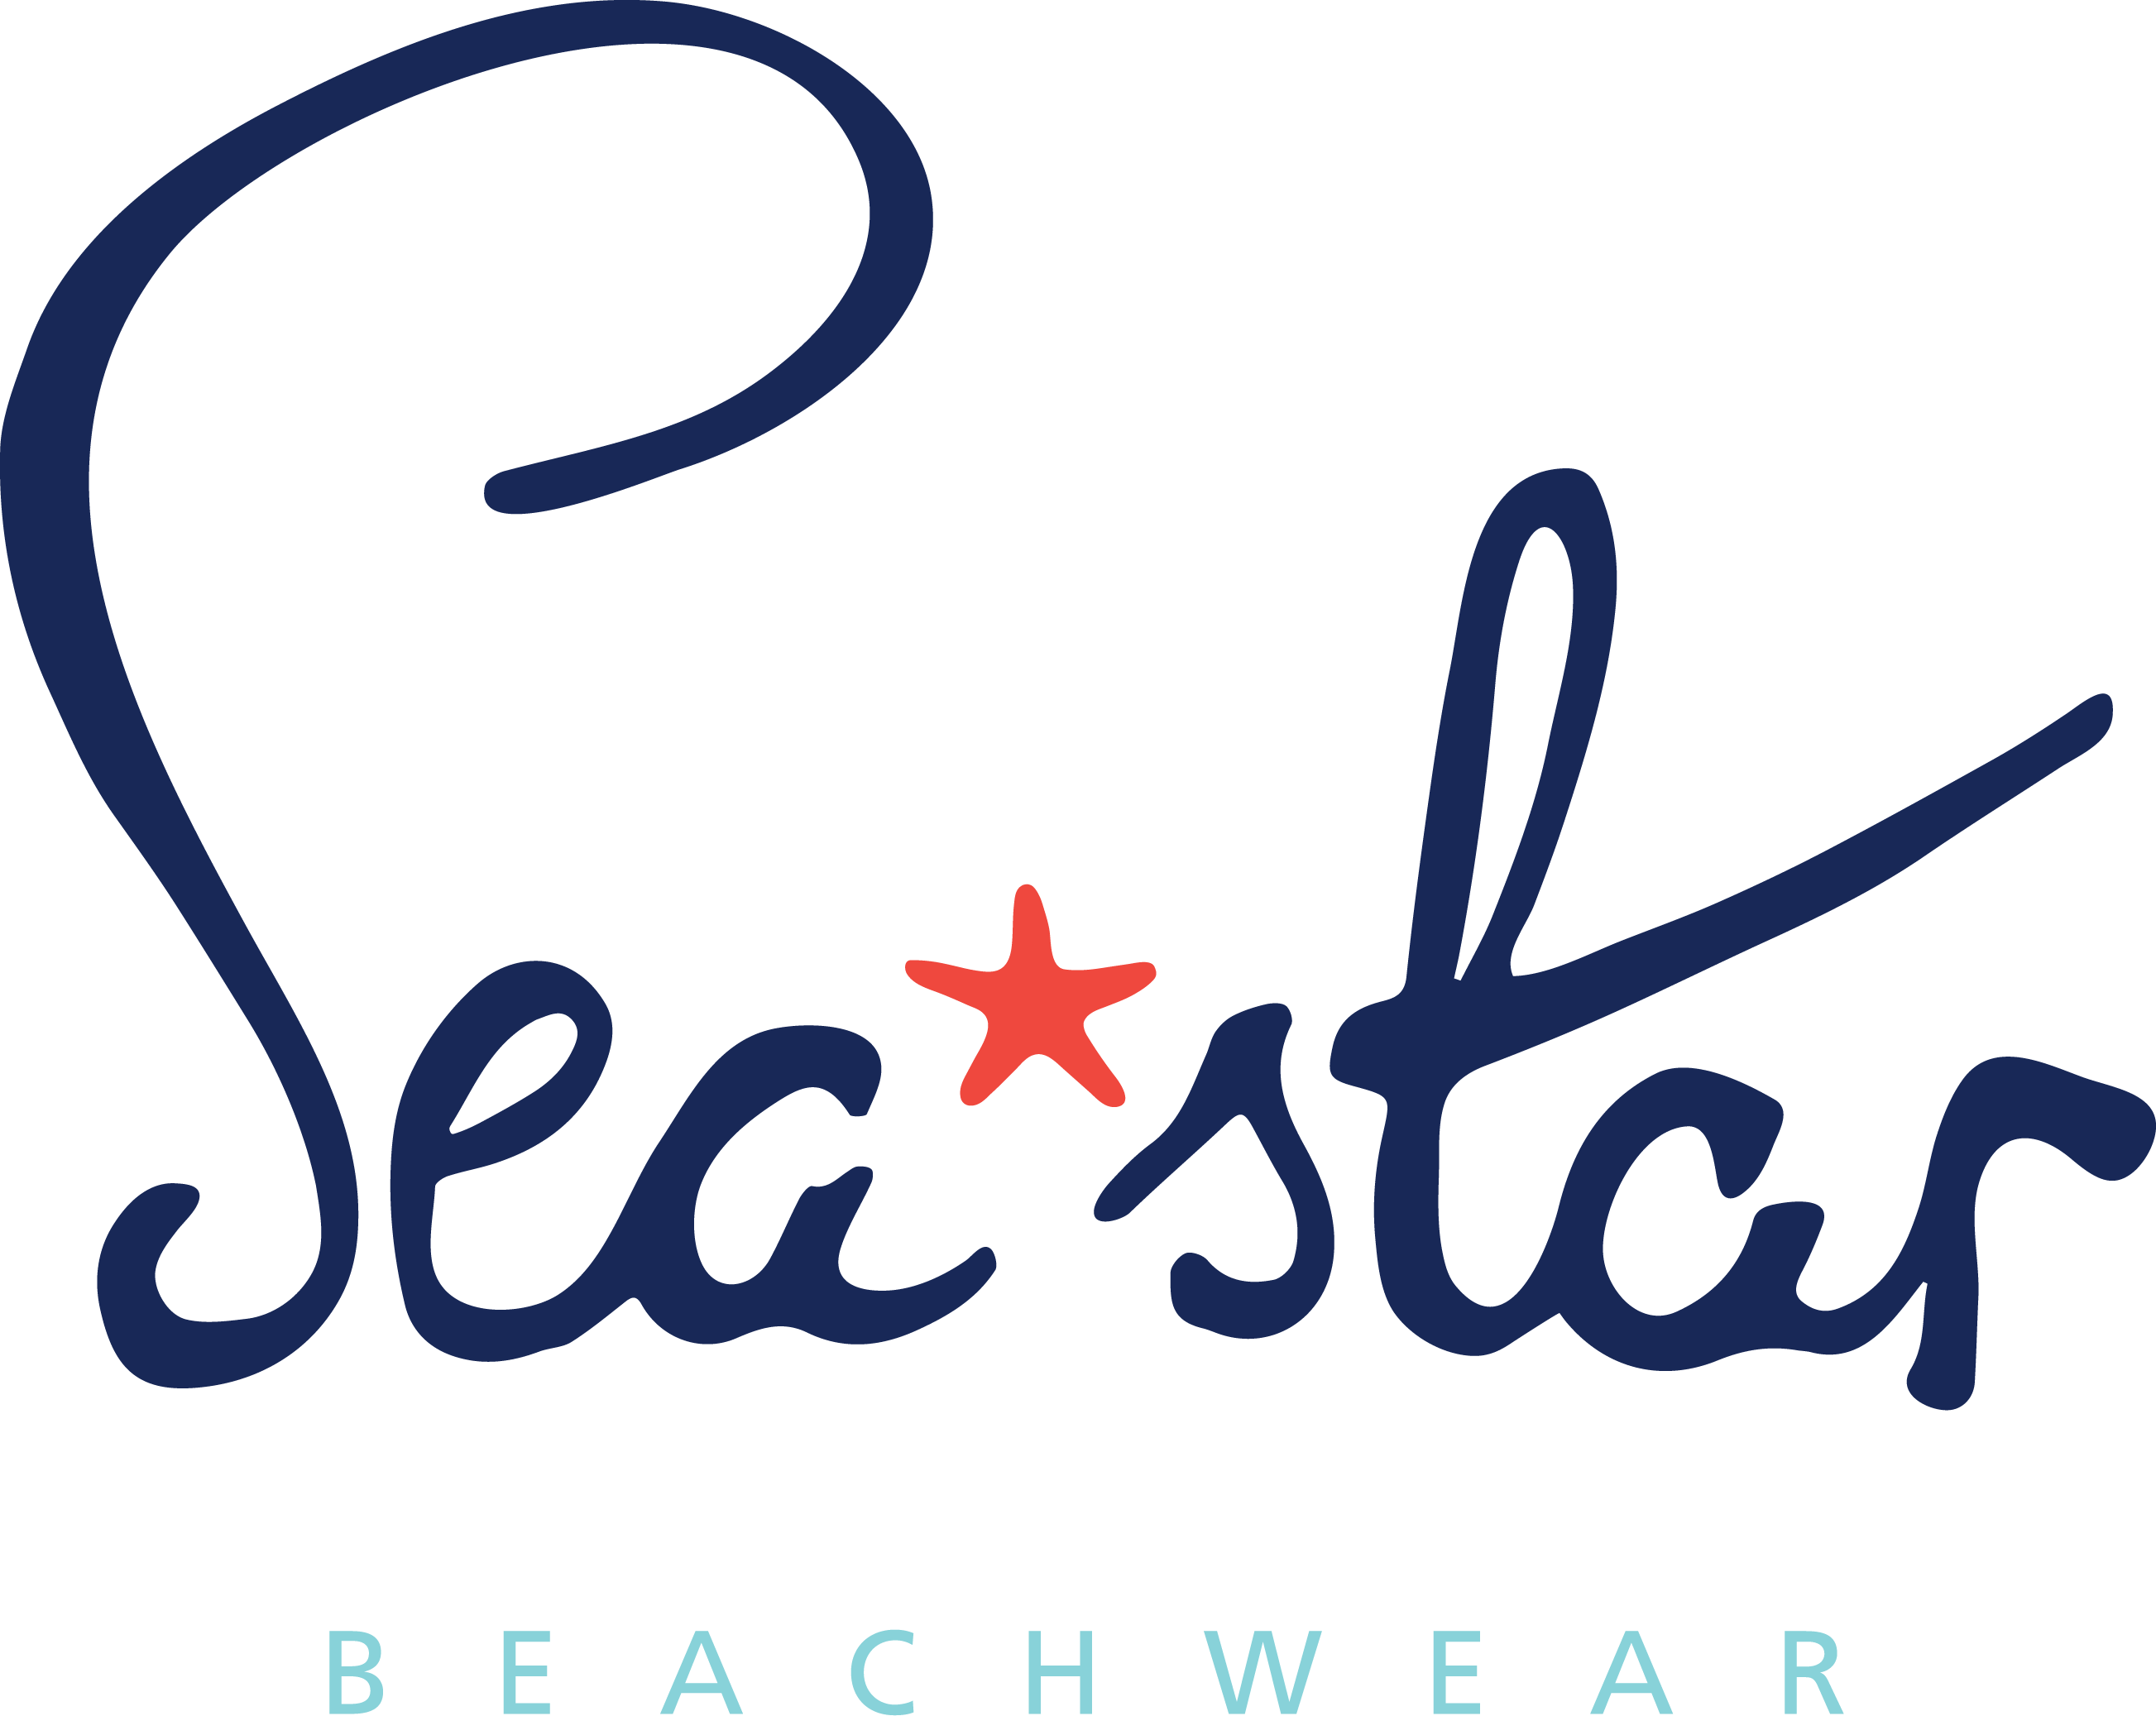 sea star shoes company